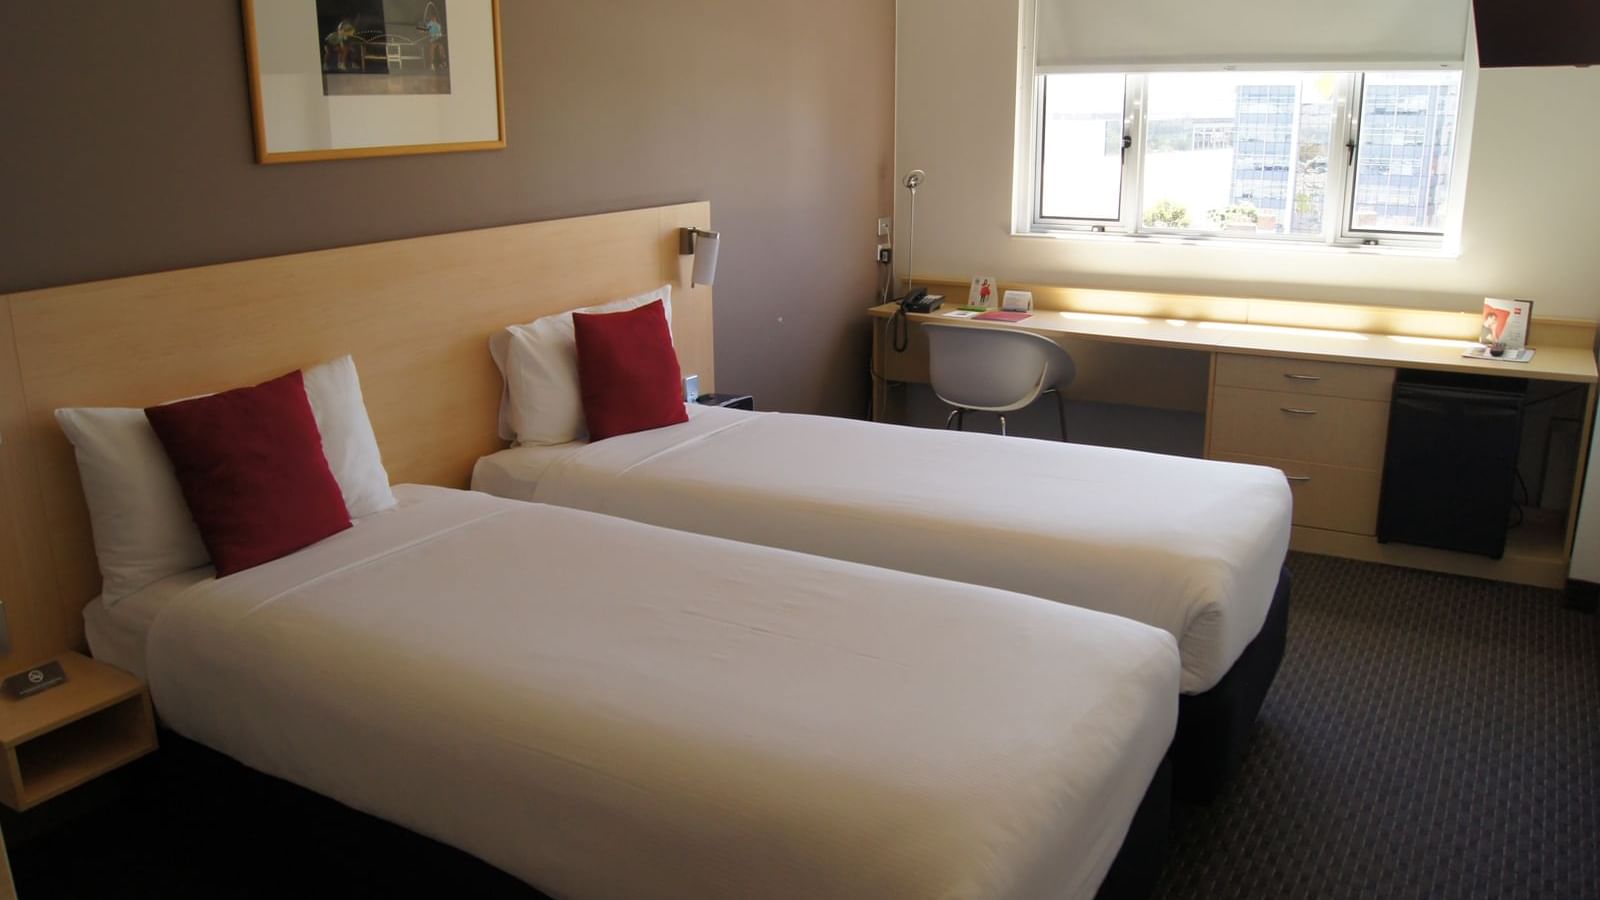 Beds in Standard King Room at Novotel Sydney Olympic Park